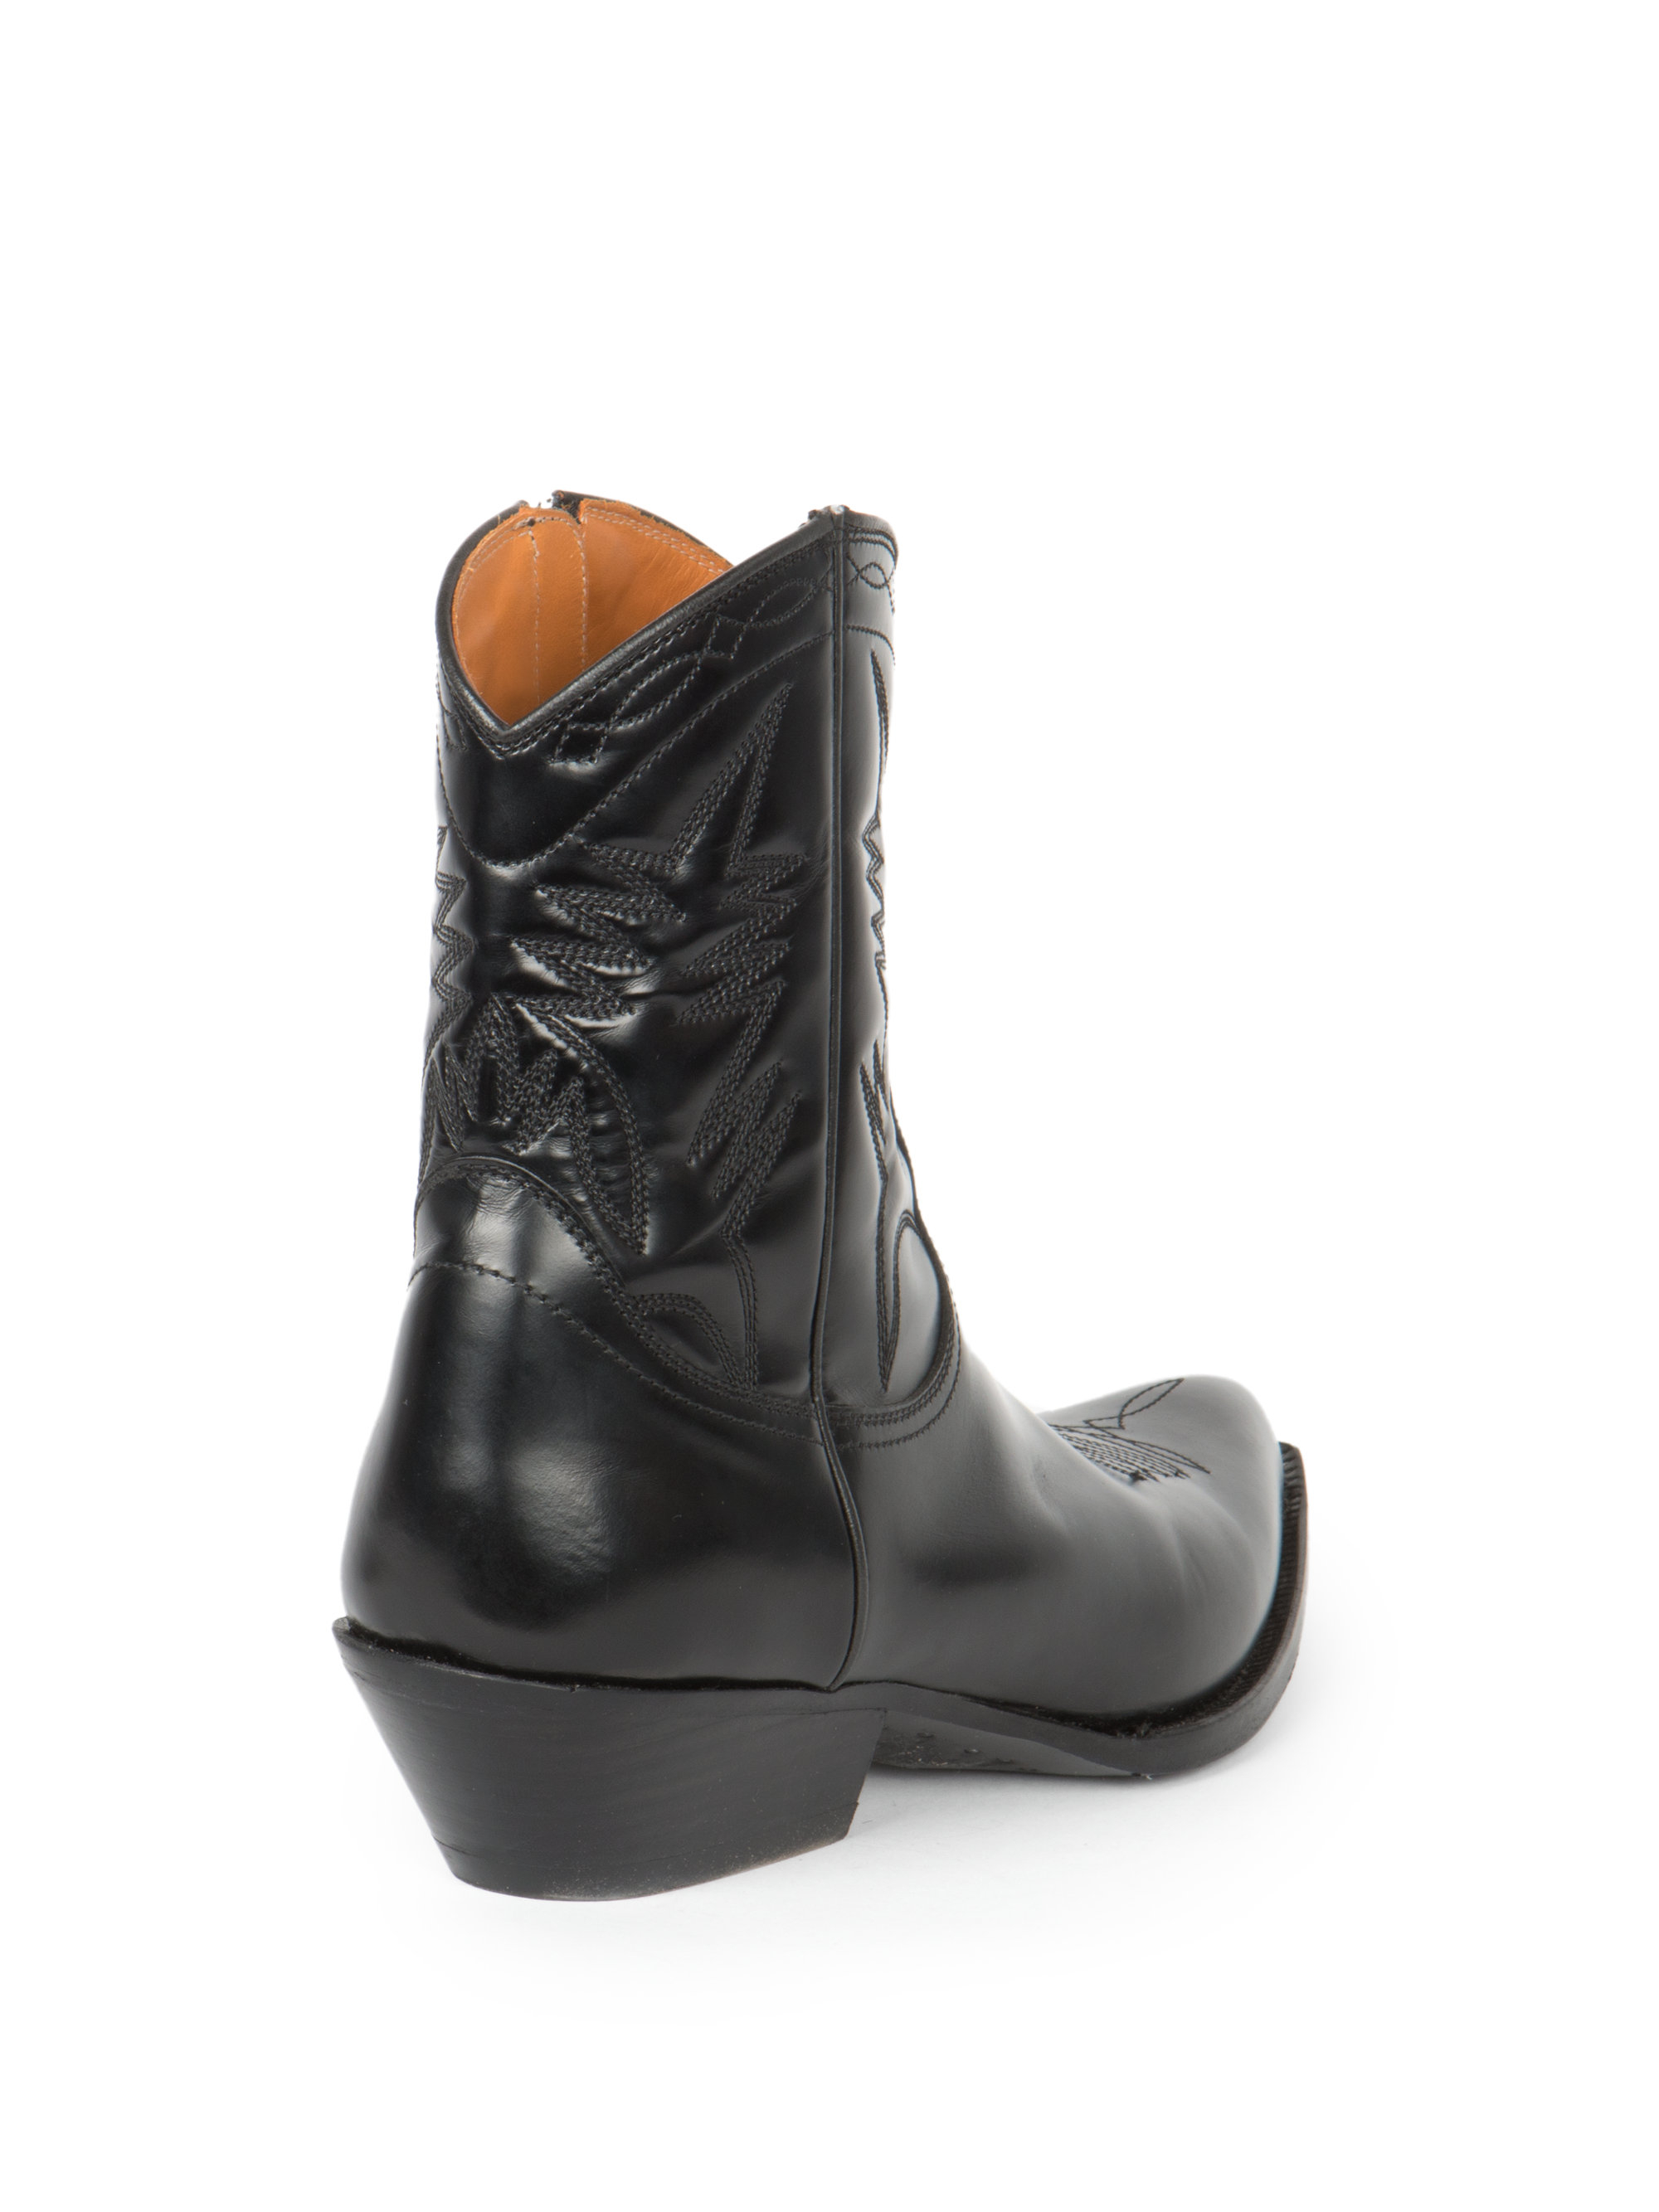 Saint laurent Santiag Leather Western Ankle Boots in Black | Lyst